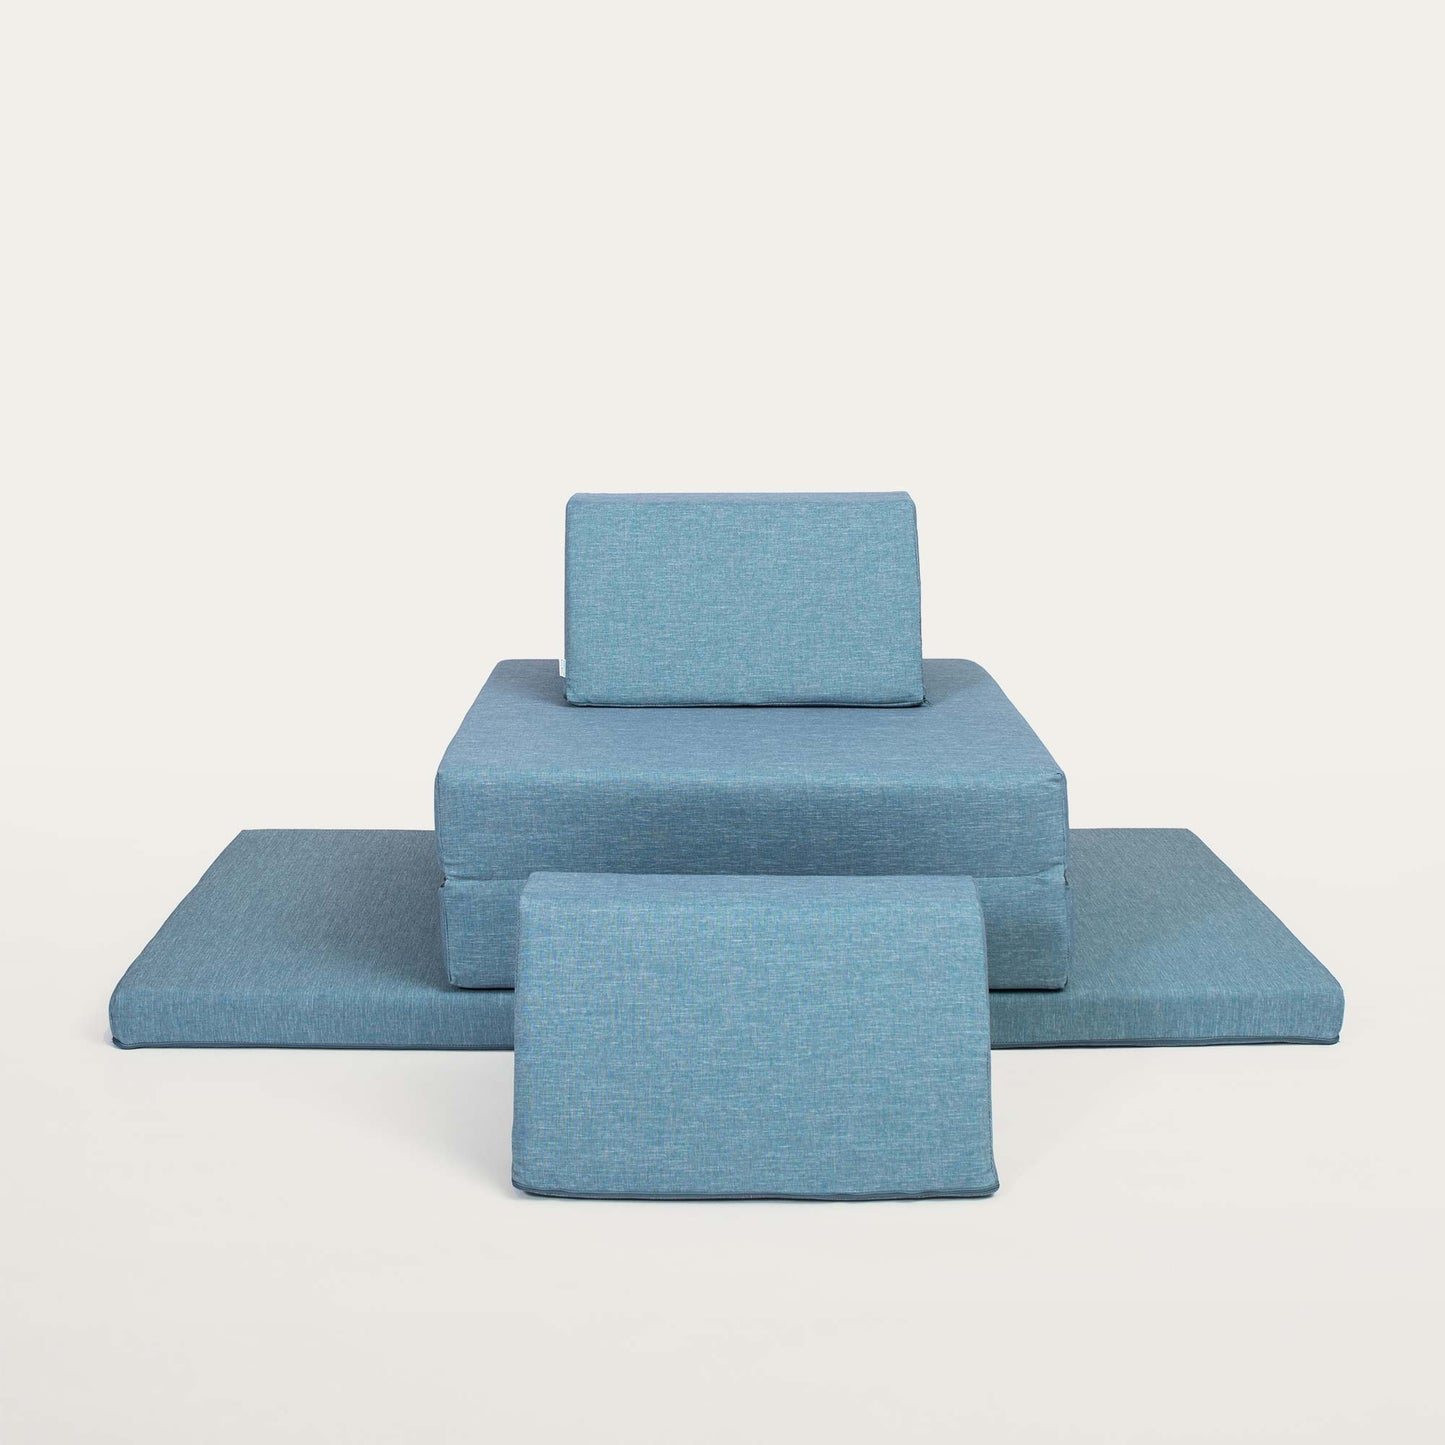 A turquoise Monboxy soft foam sofa set arranged into a medal pedestal form shape.